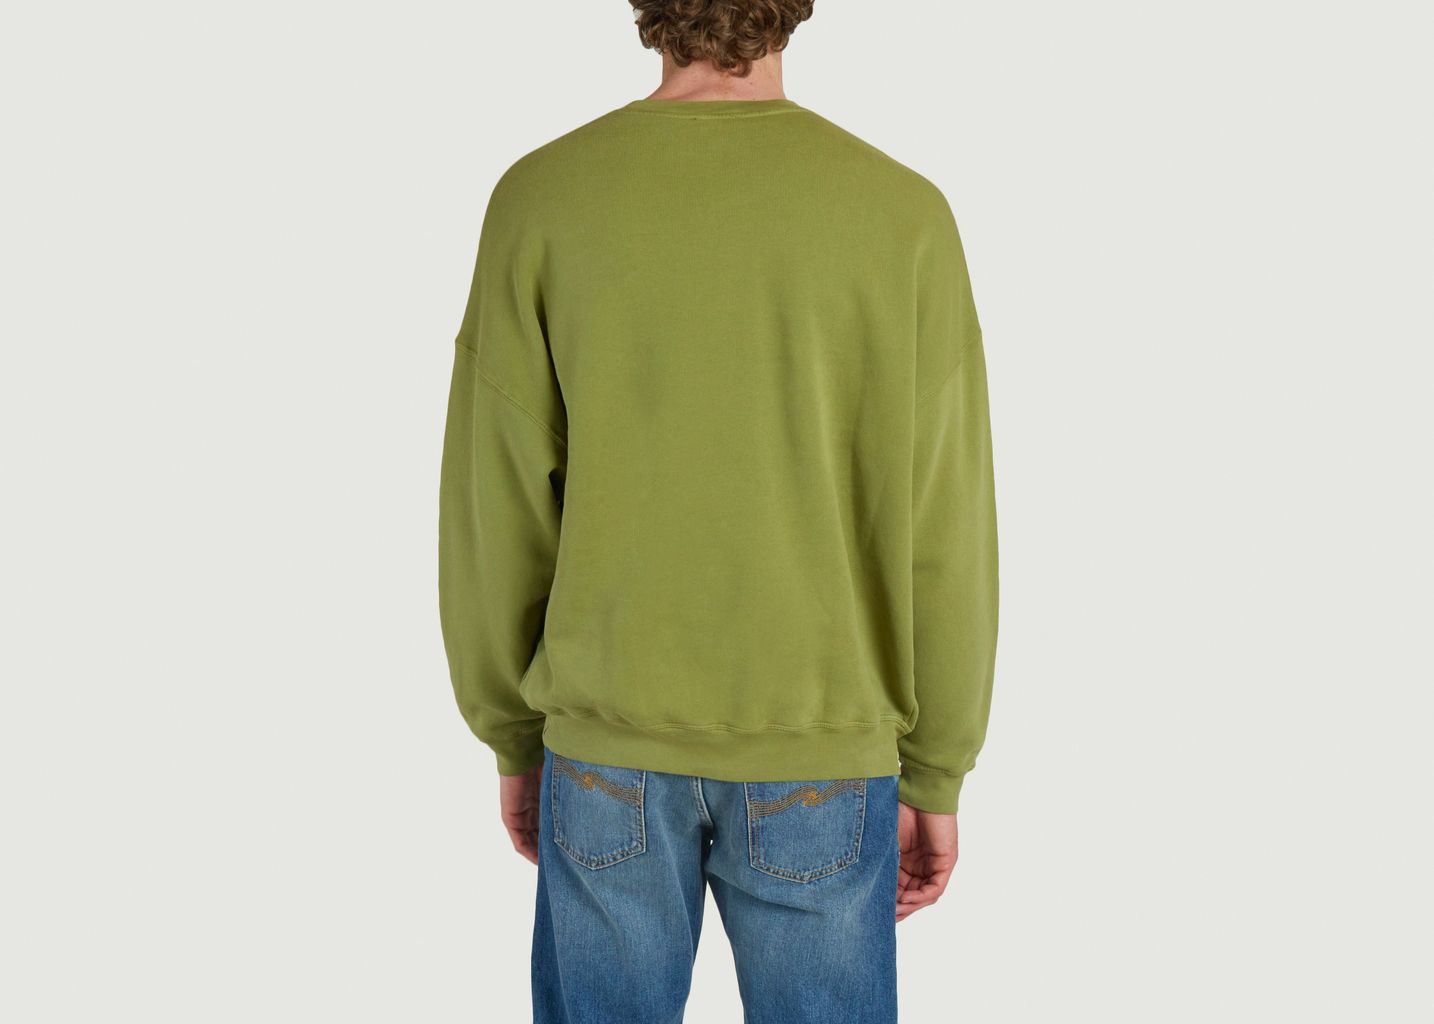 Sweatshirt with Izubird logo, loose fit - American Vintage